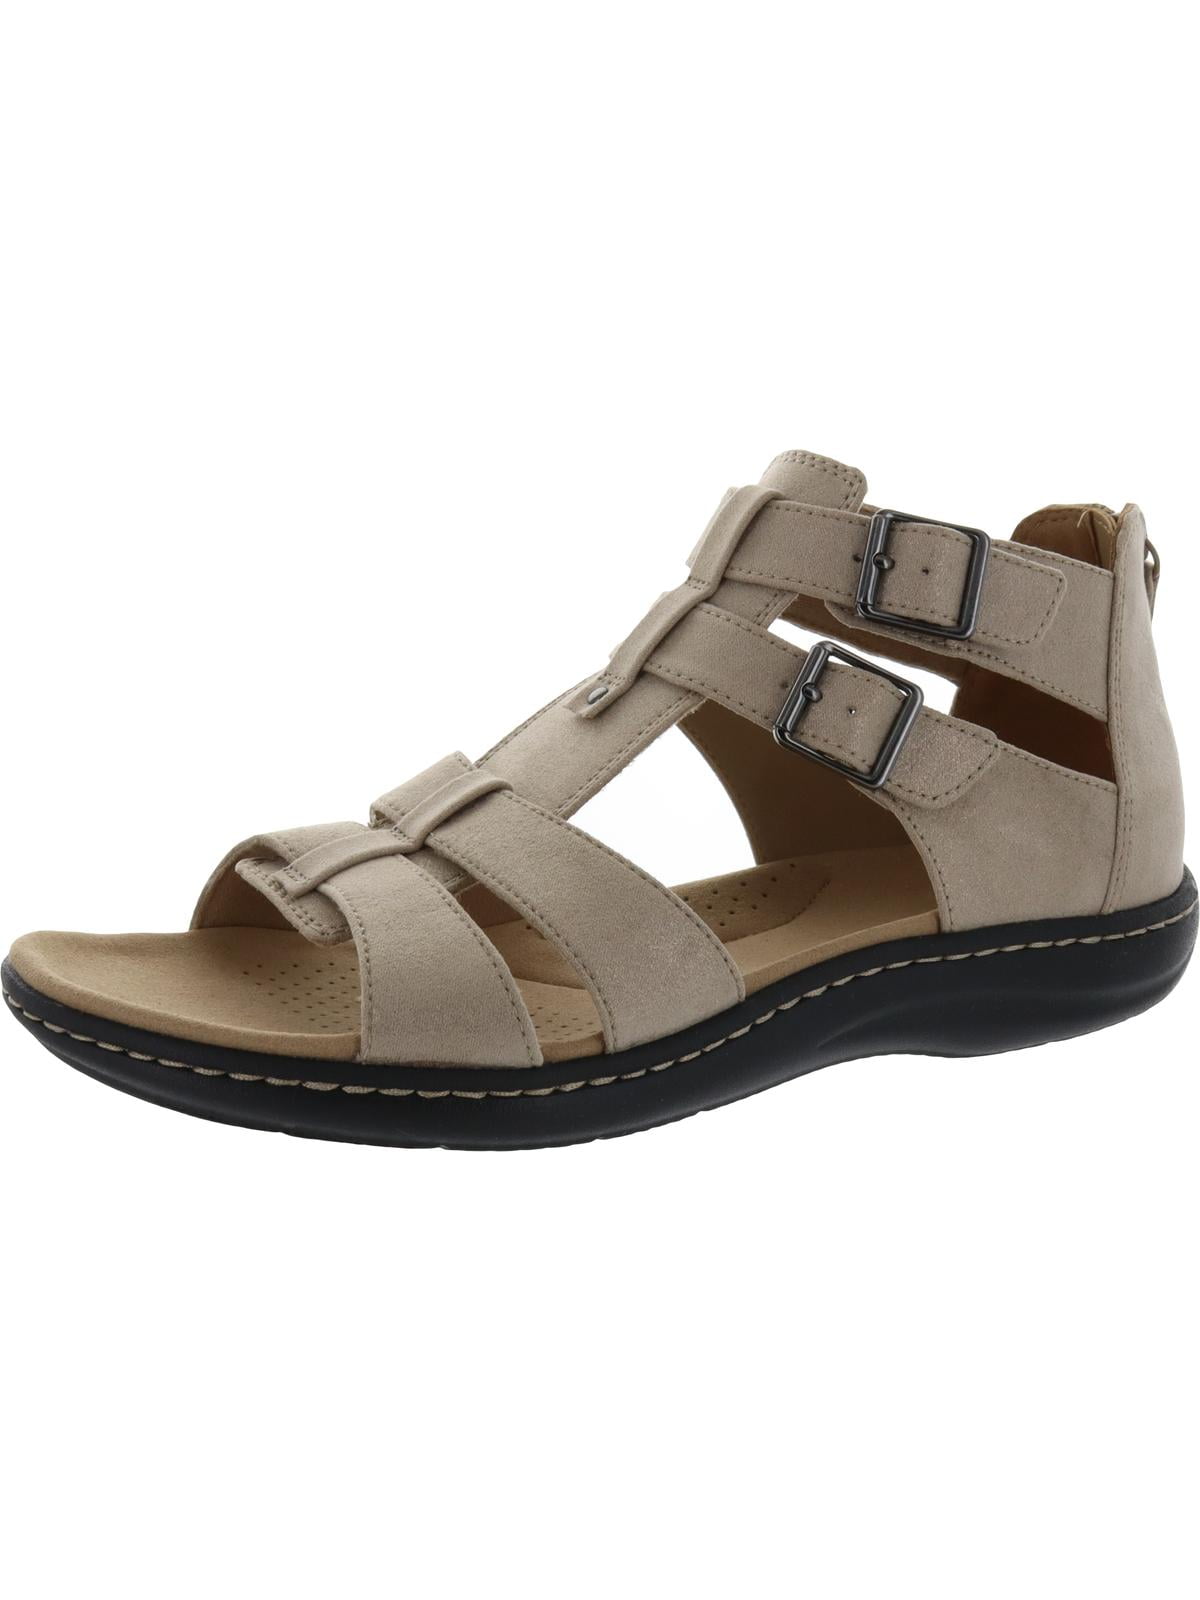 Clarks Womens Flat Sandal 6 Metallic Leather - Walmart.com